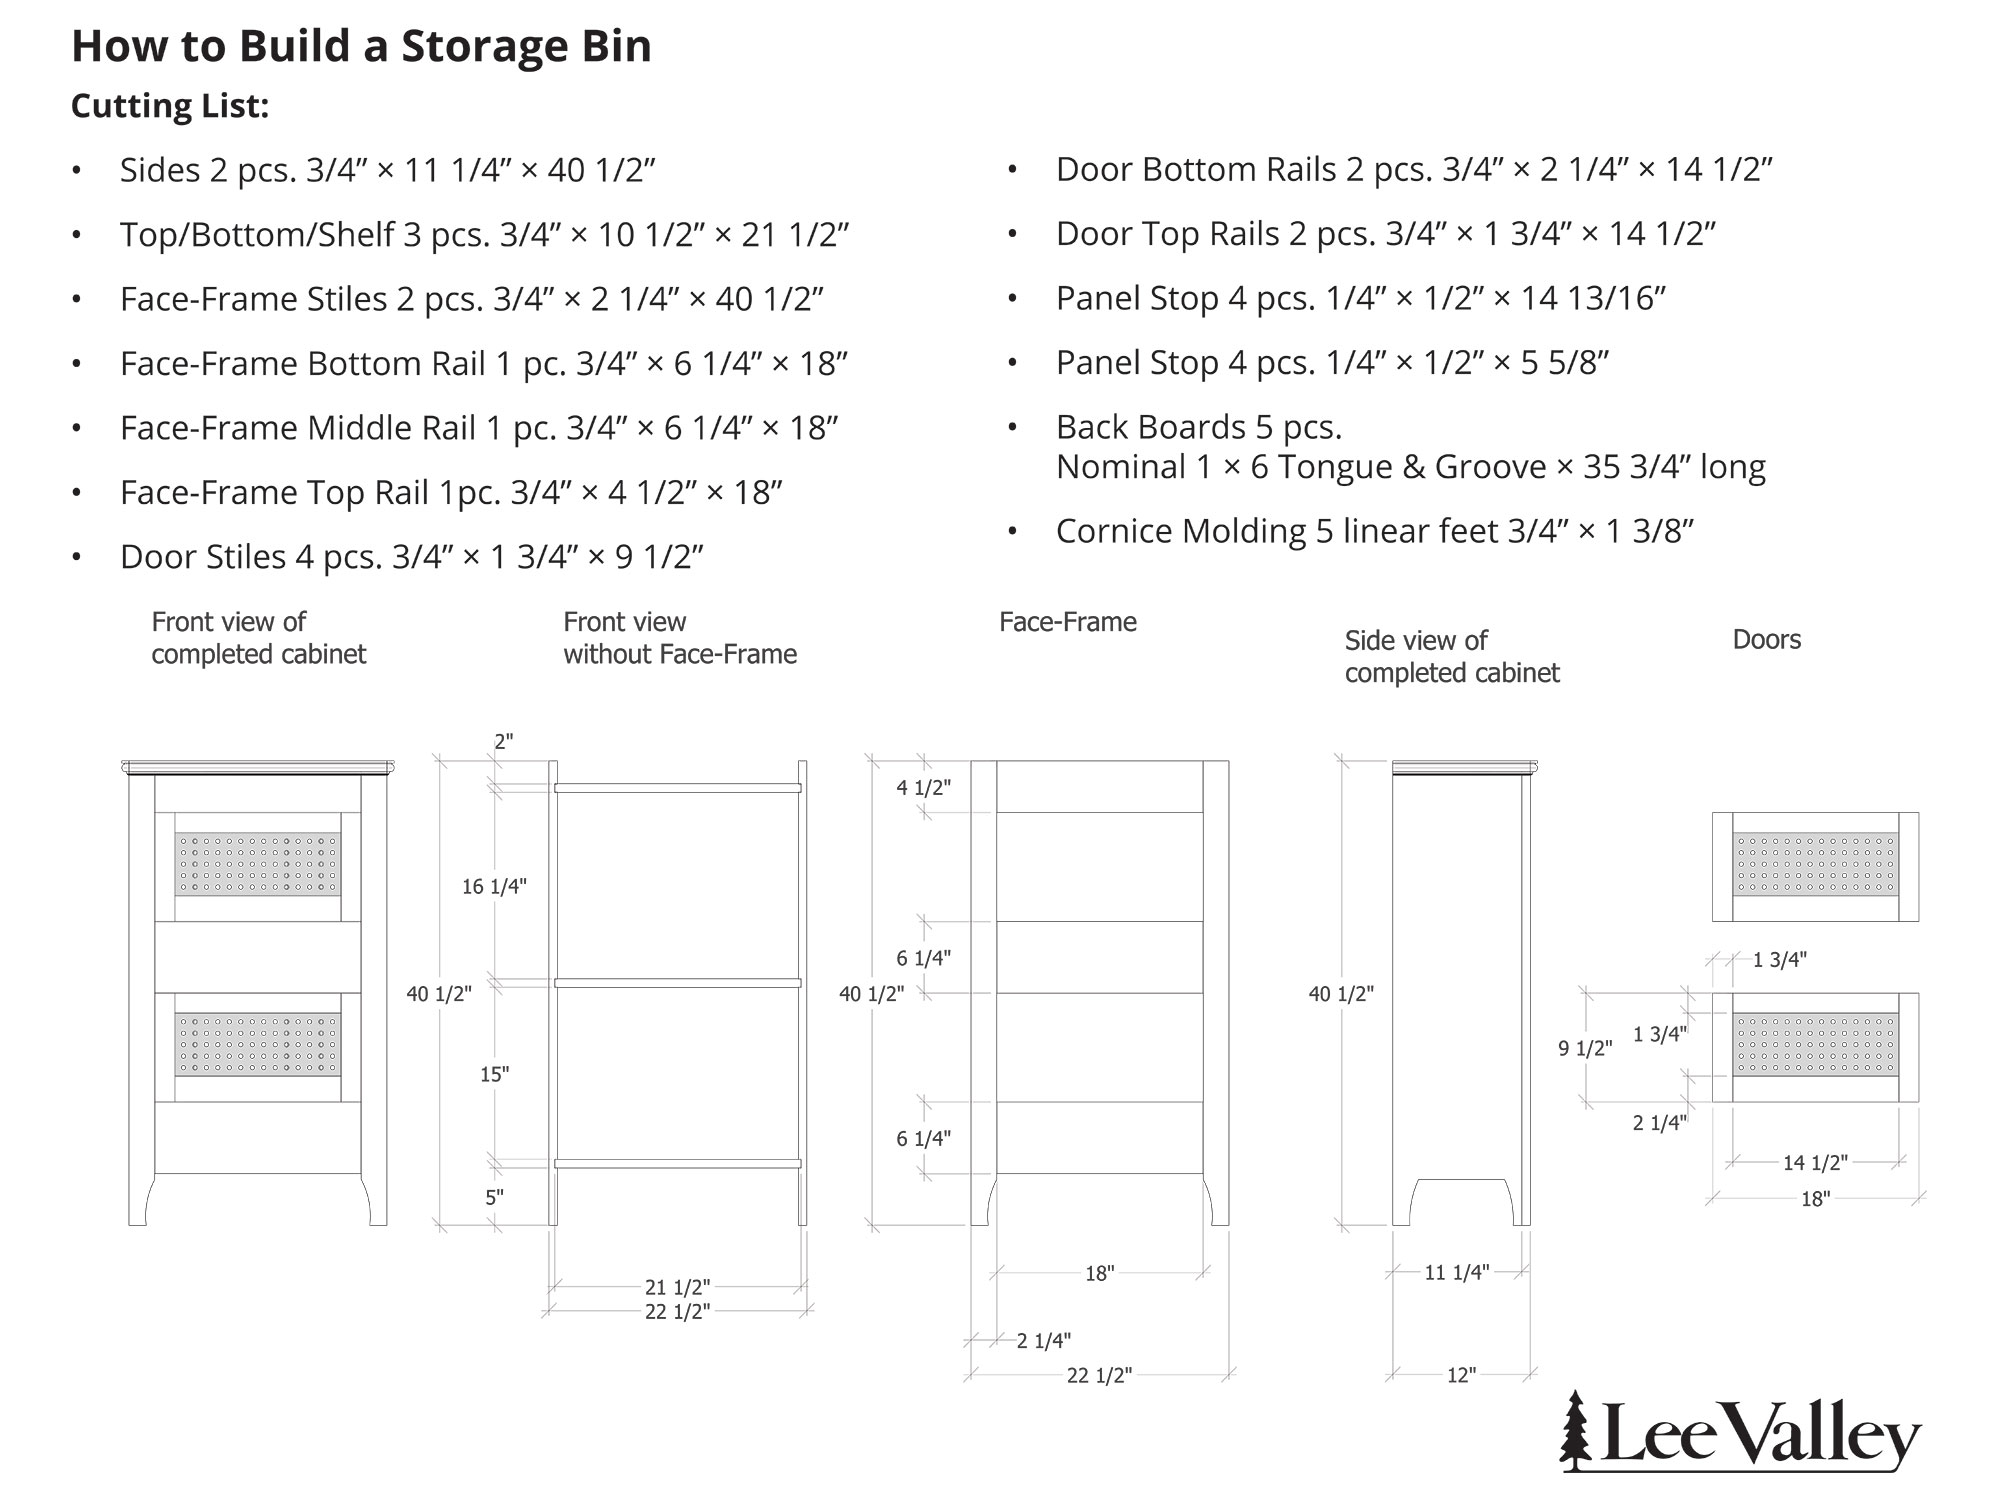 How to Build a Food Storage Bin